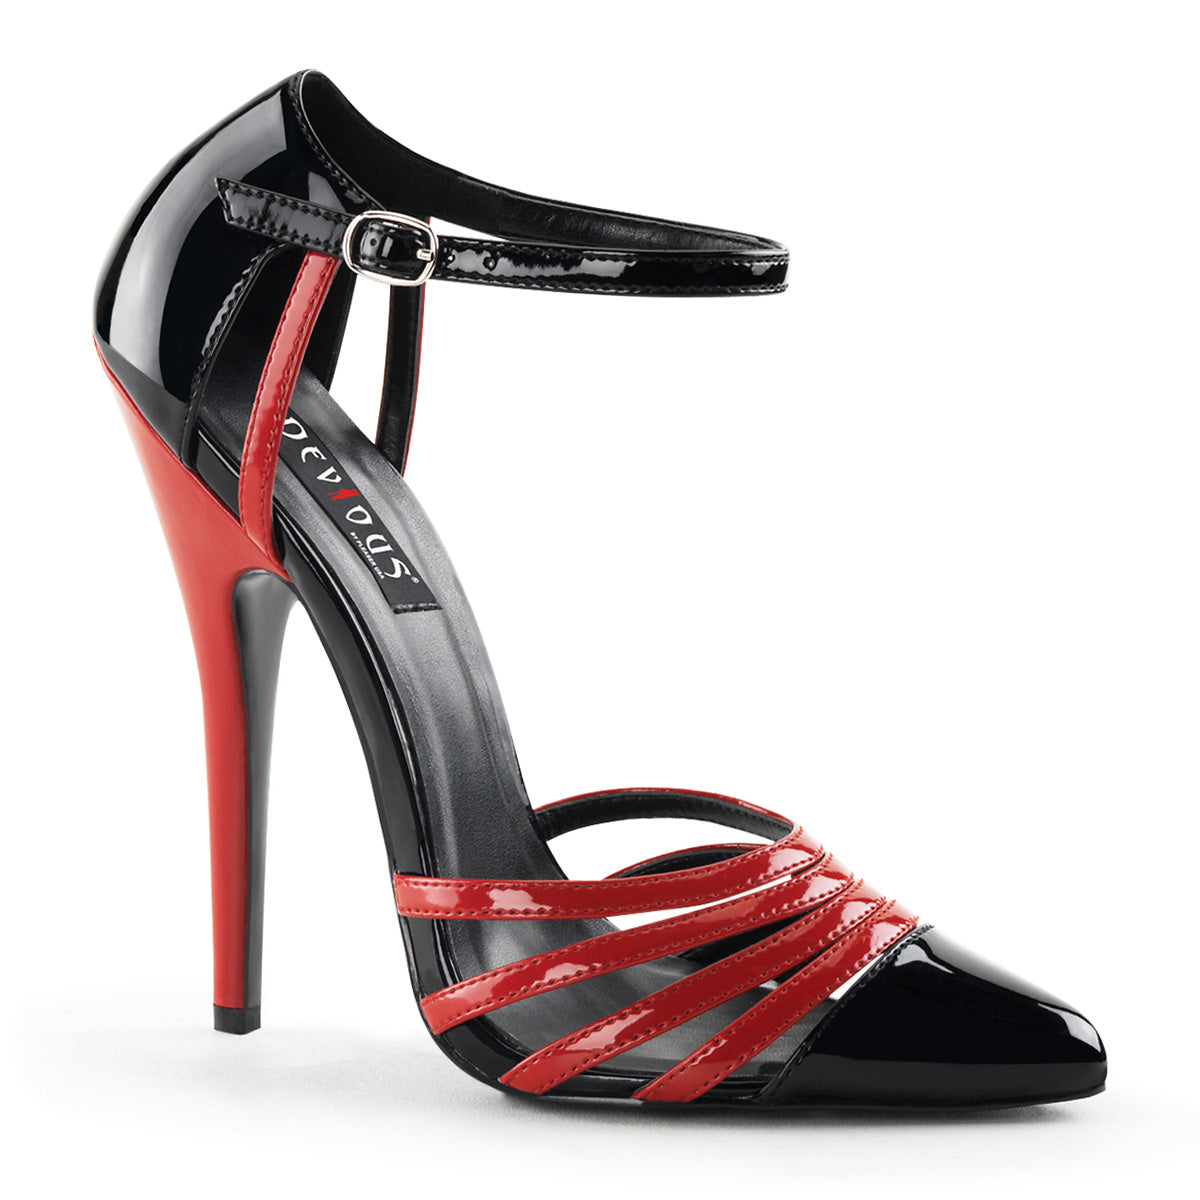 DOMINA-412 Black & Red Ankle High Heel